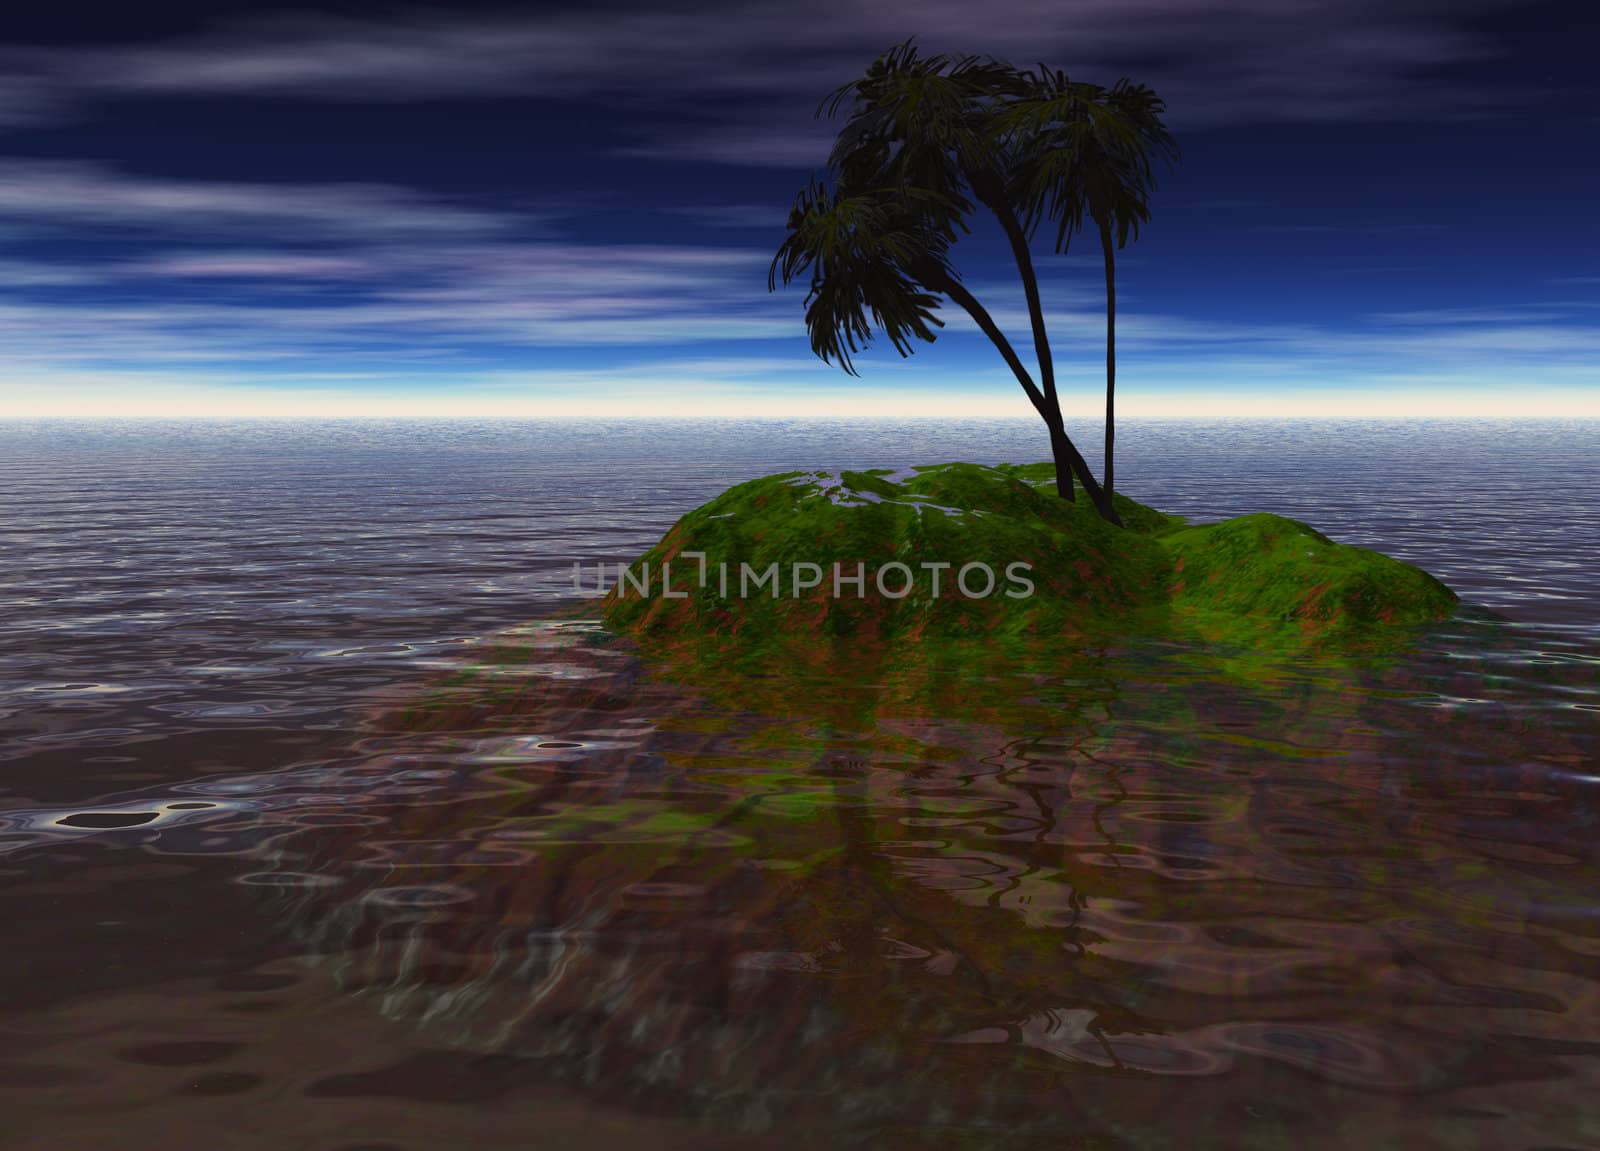 Romantic Desert Island with Palm Tree by bobbigmac